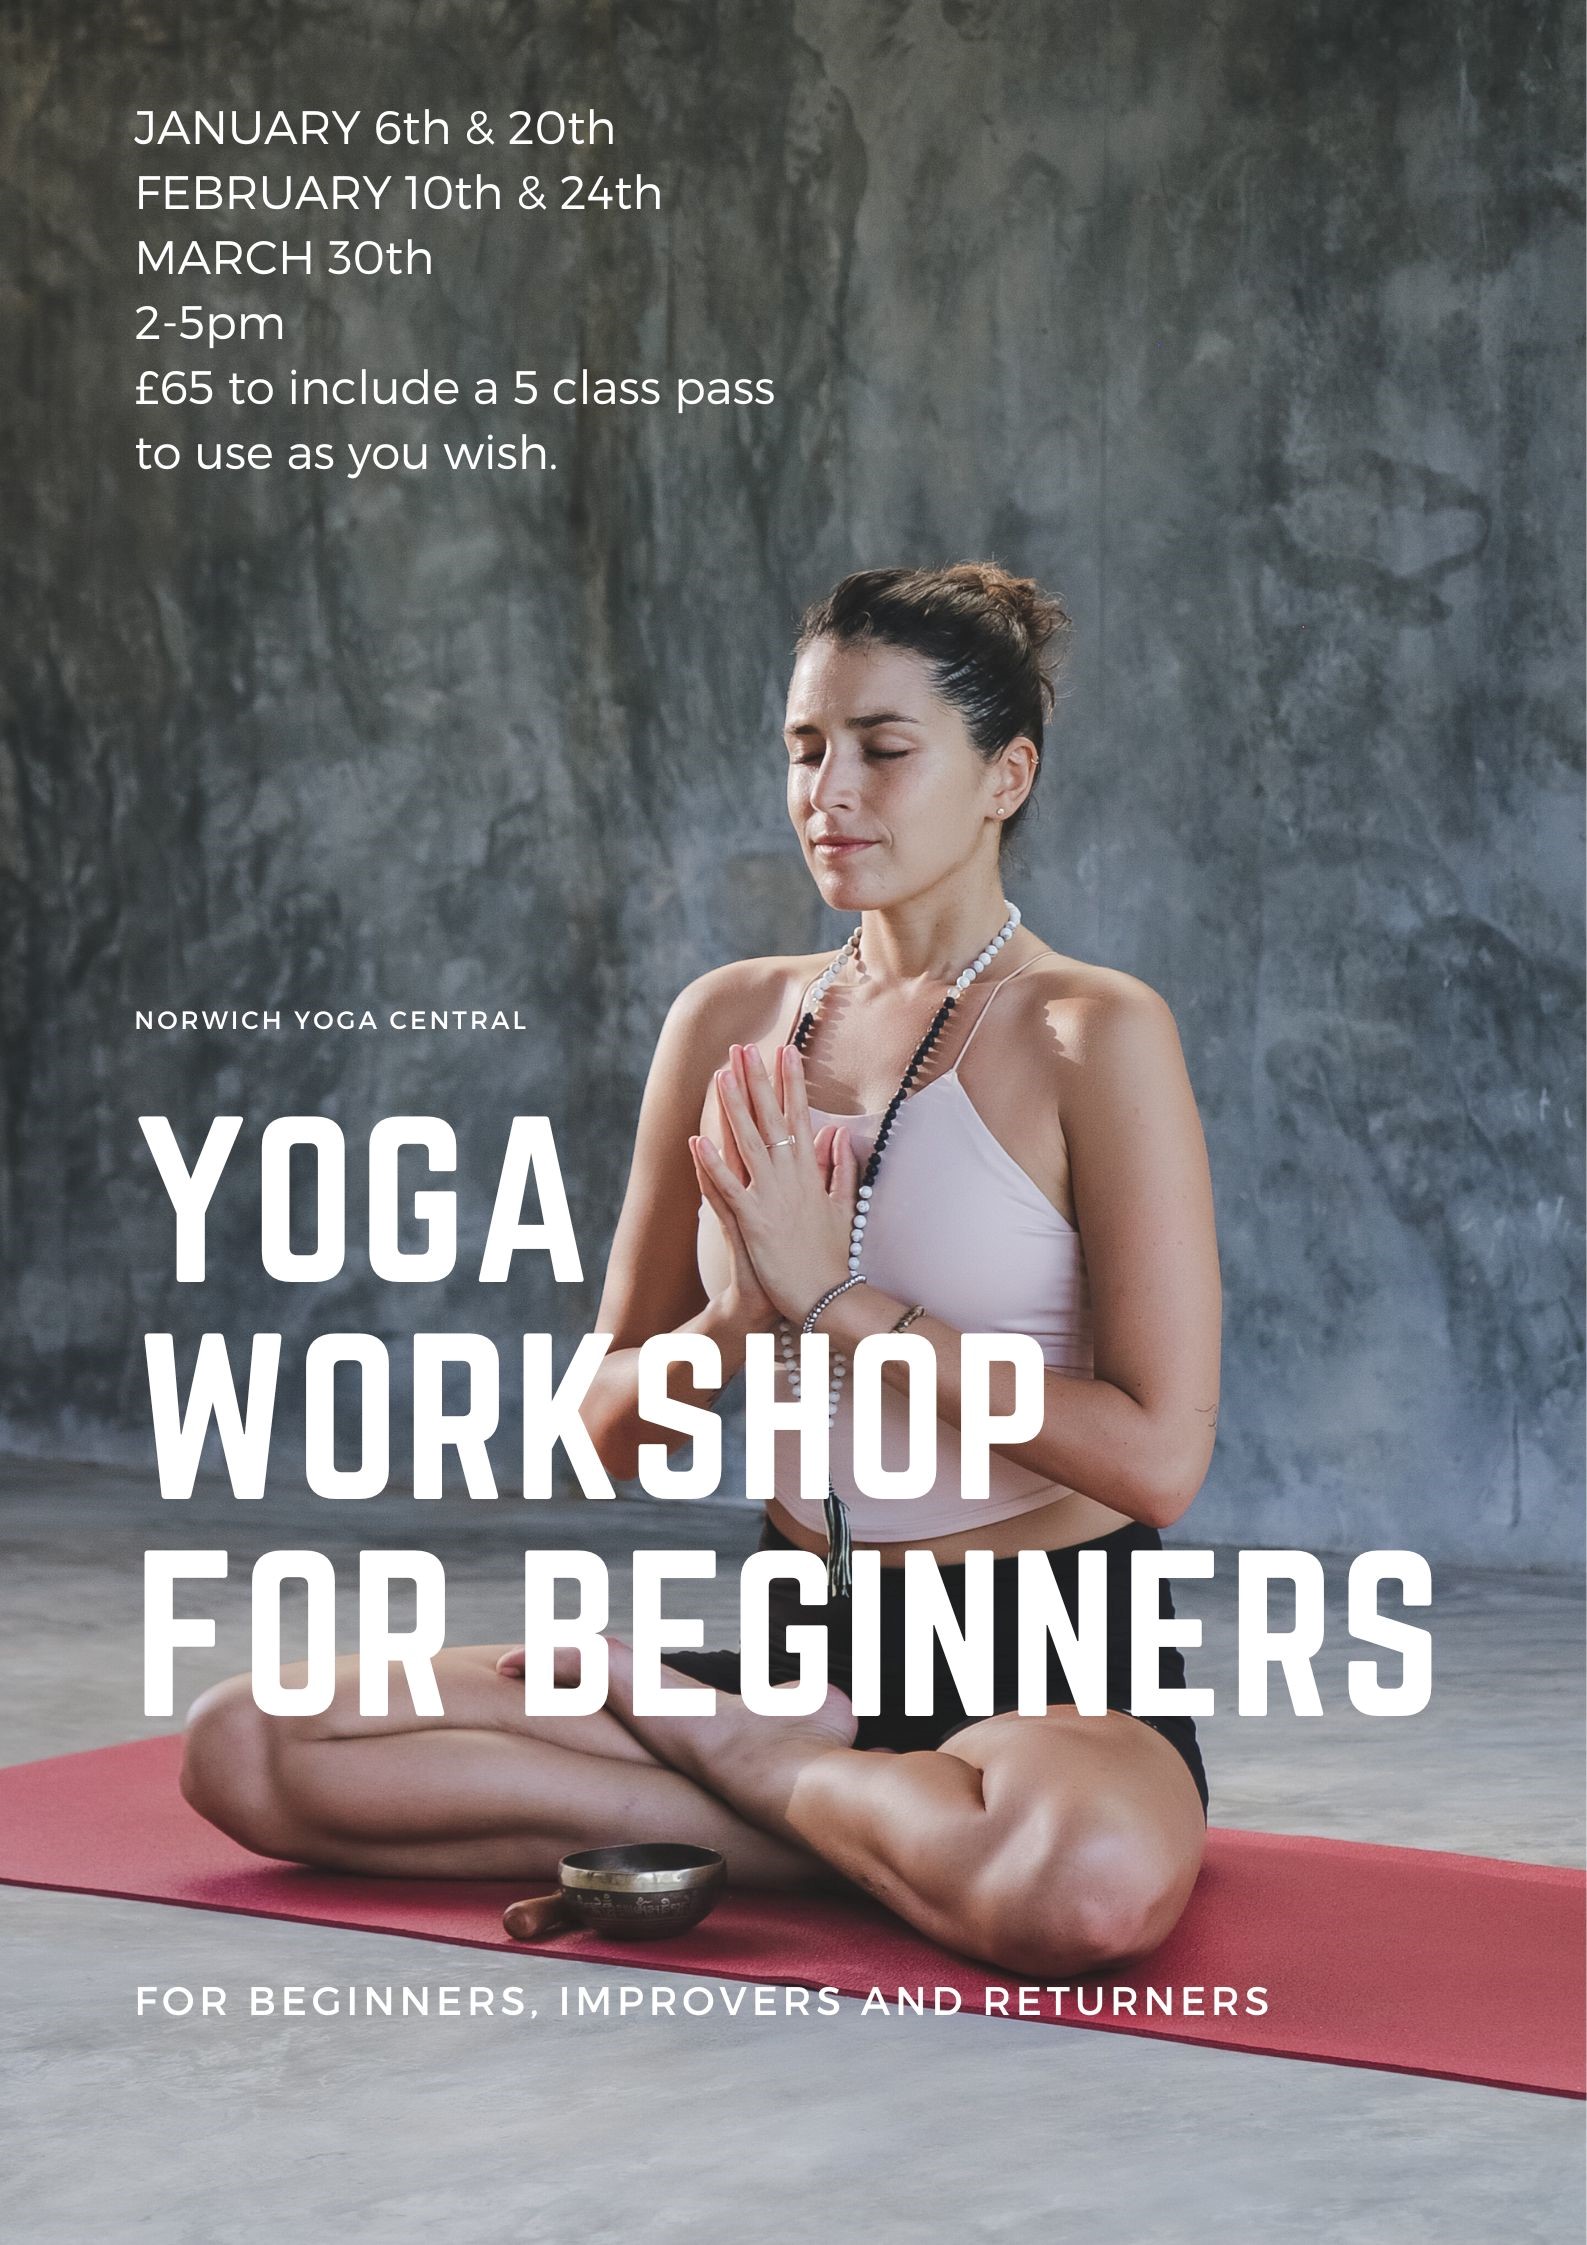 Yoga workshop for beginners advert